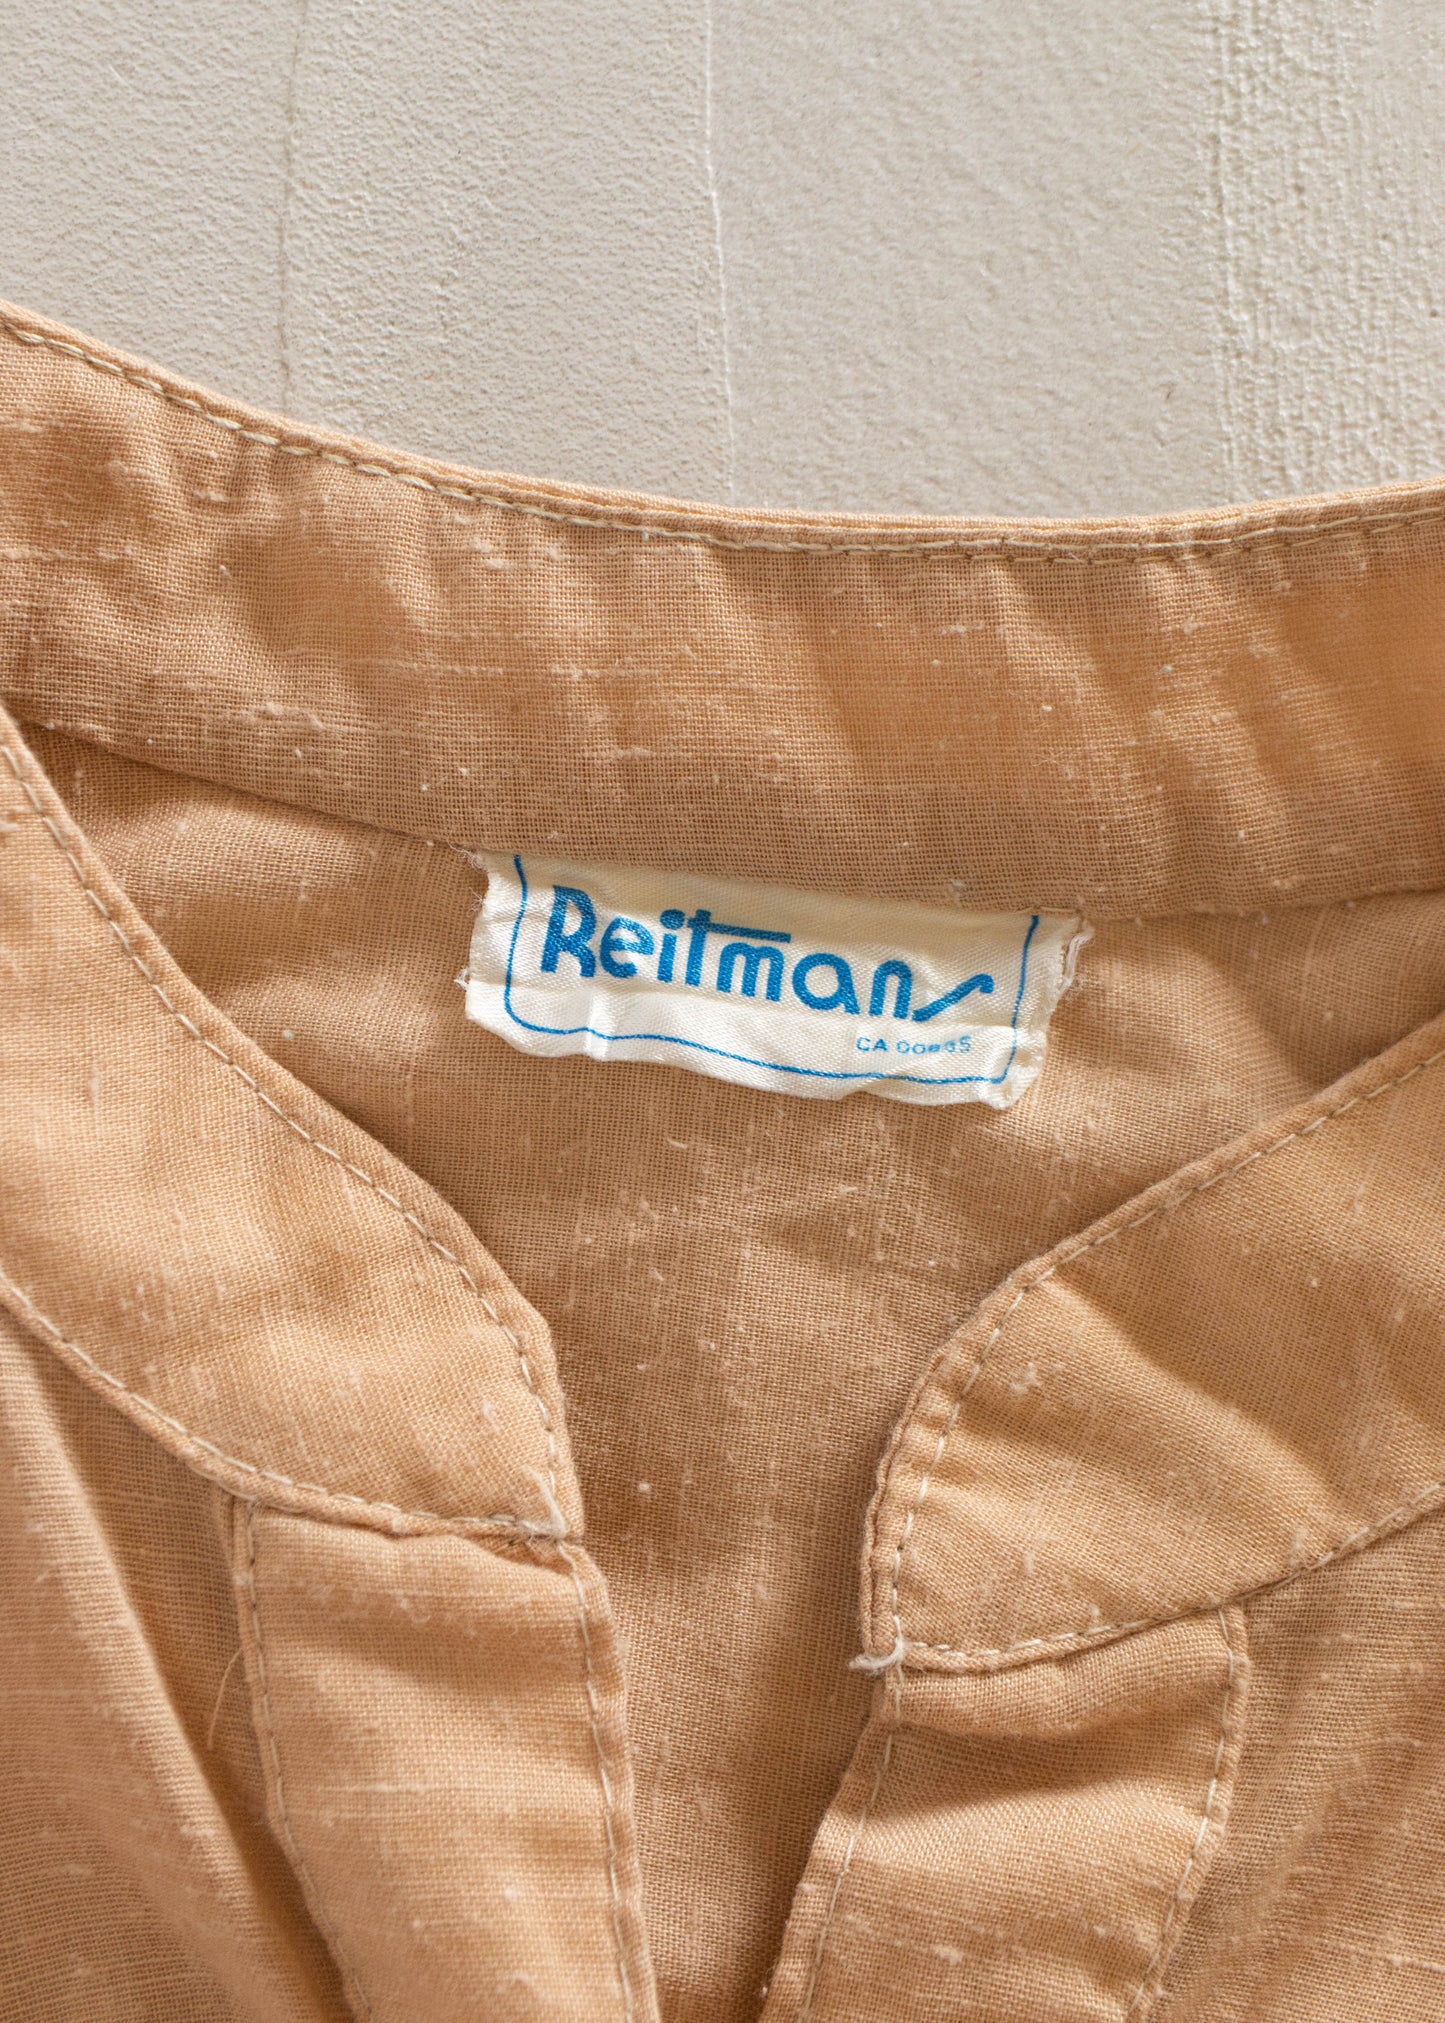 1980s Reitmans Blouse Size M/L